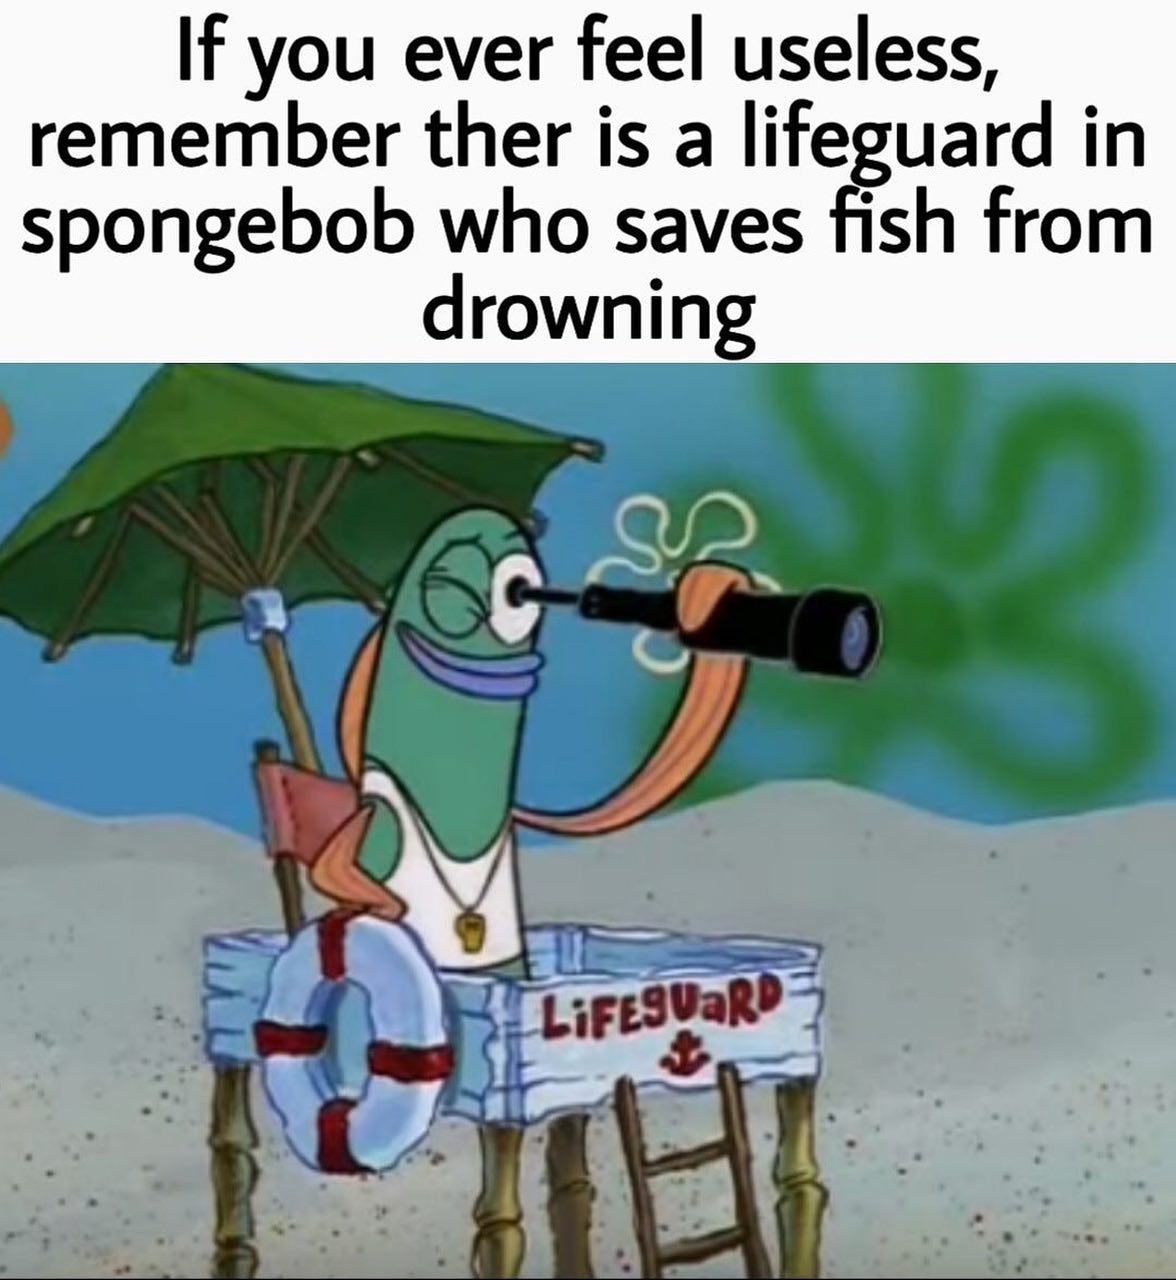 dank memes - spongebob lifeguard meme - If you ever feel useless, remember ther is a lifeguard in spongebob who saves fish from drowning LiFESUARD